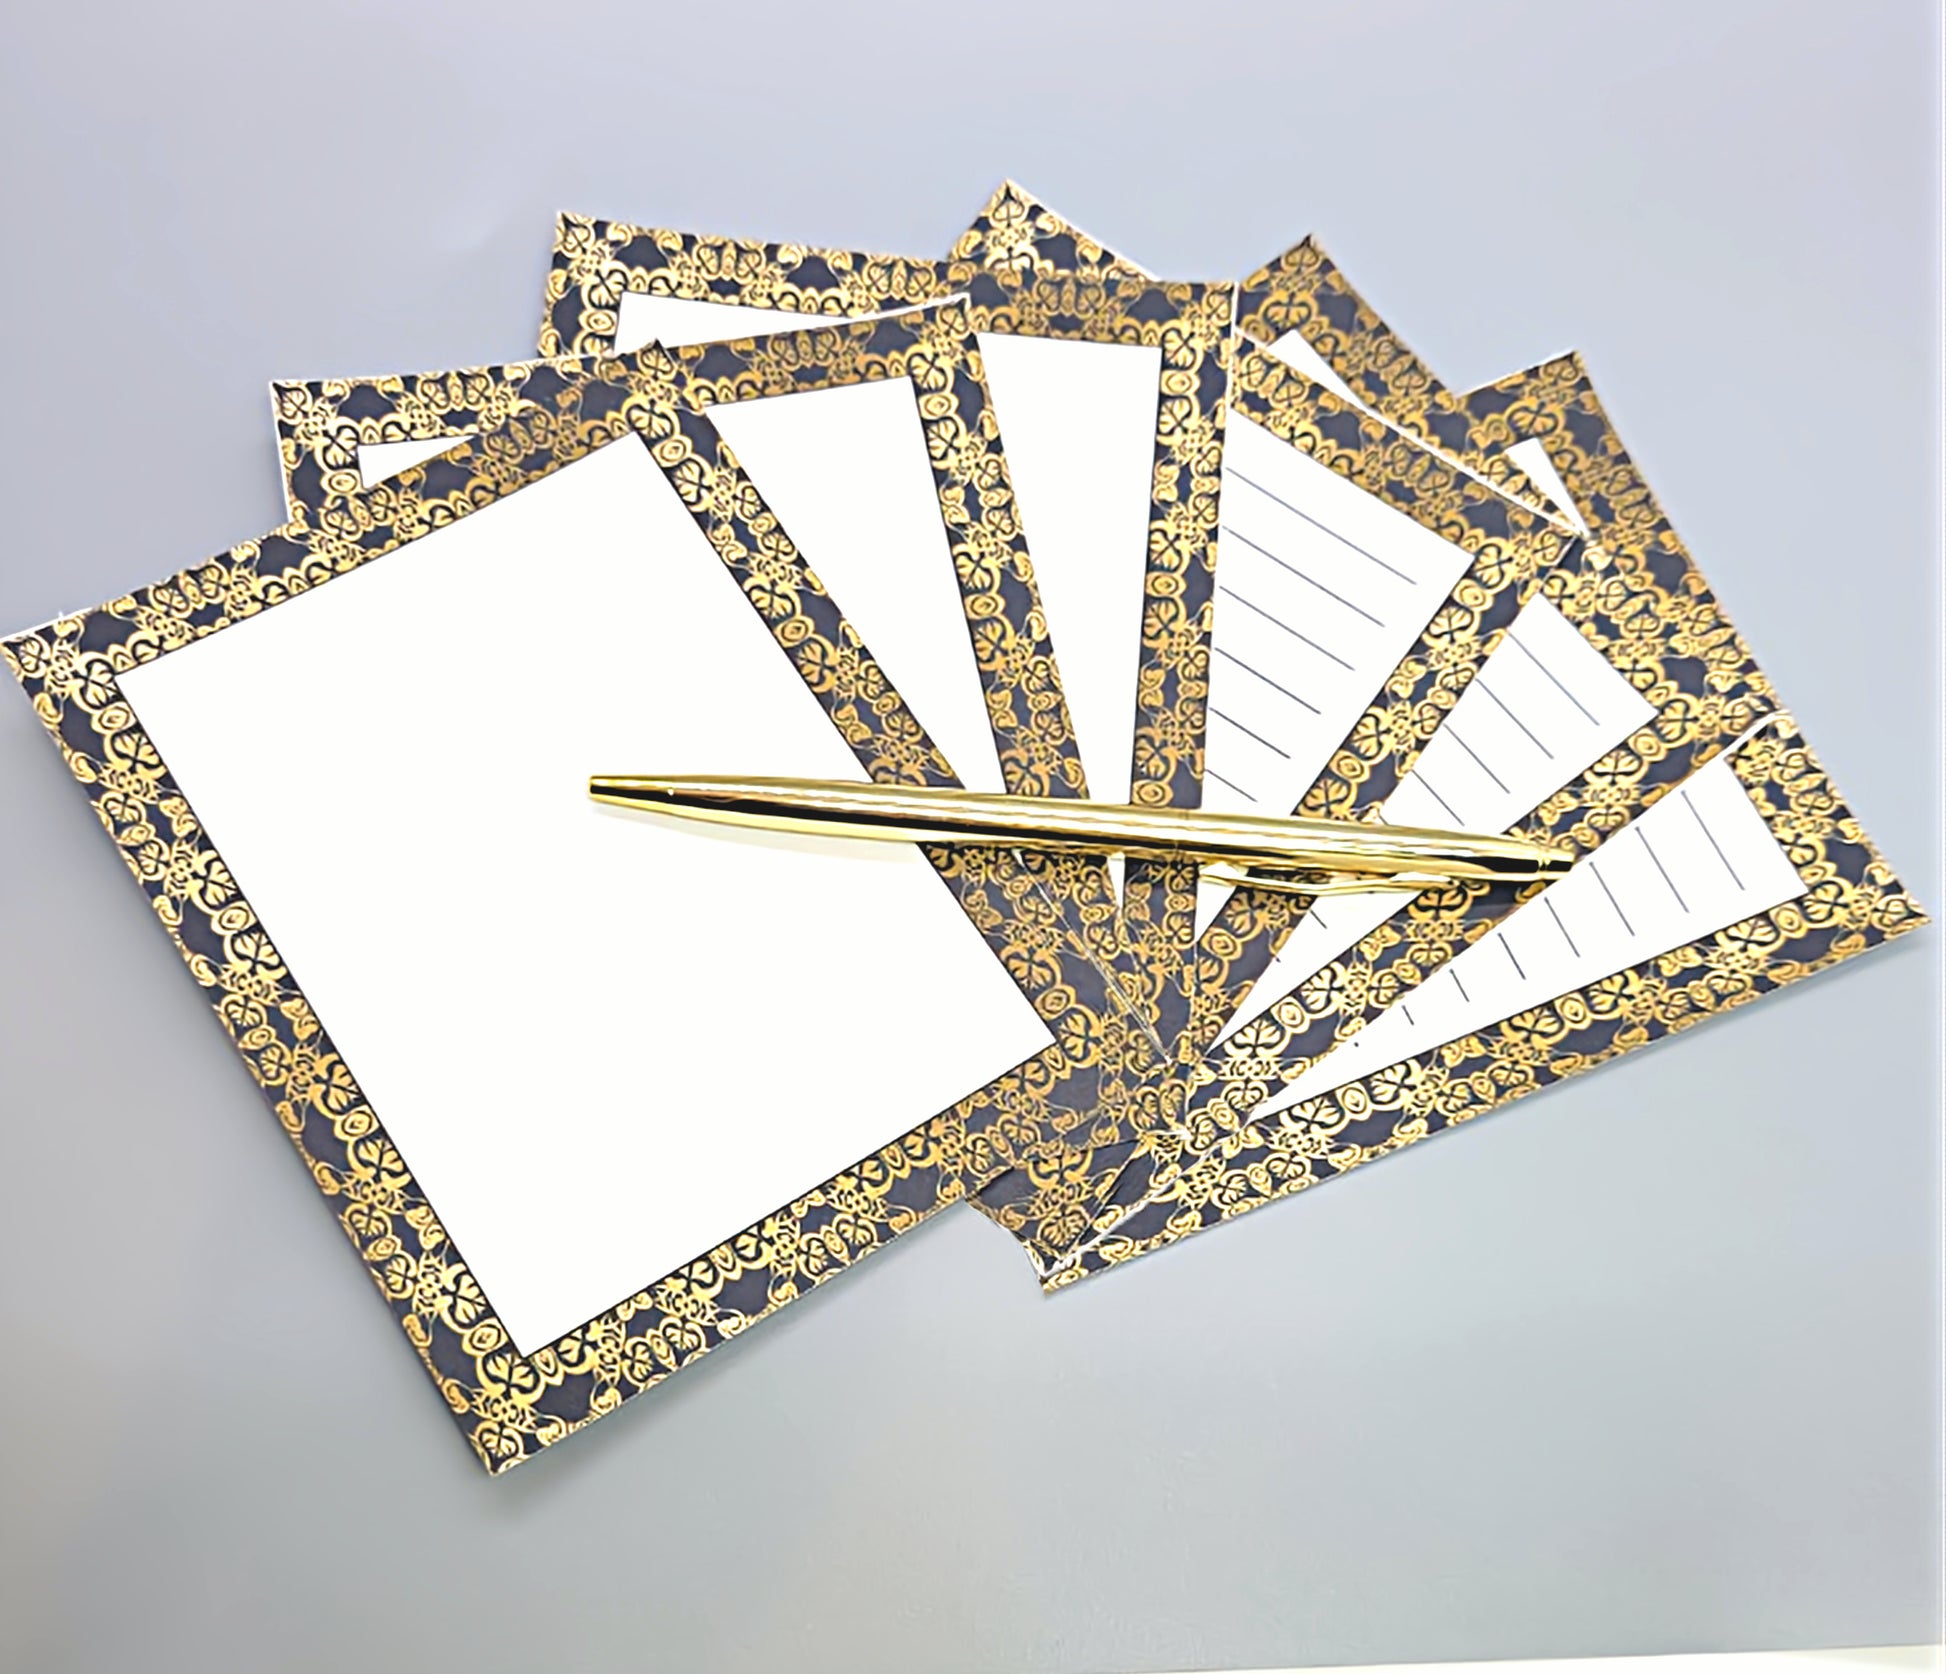 42-Pc Stationery For Him Gift Box Set w/Reusable Desktop Organizer Box and Gold Pen - Black & Gold Geometric - Chic Brico